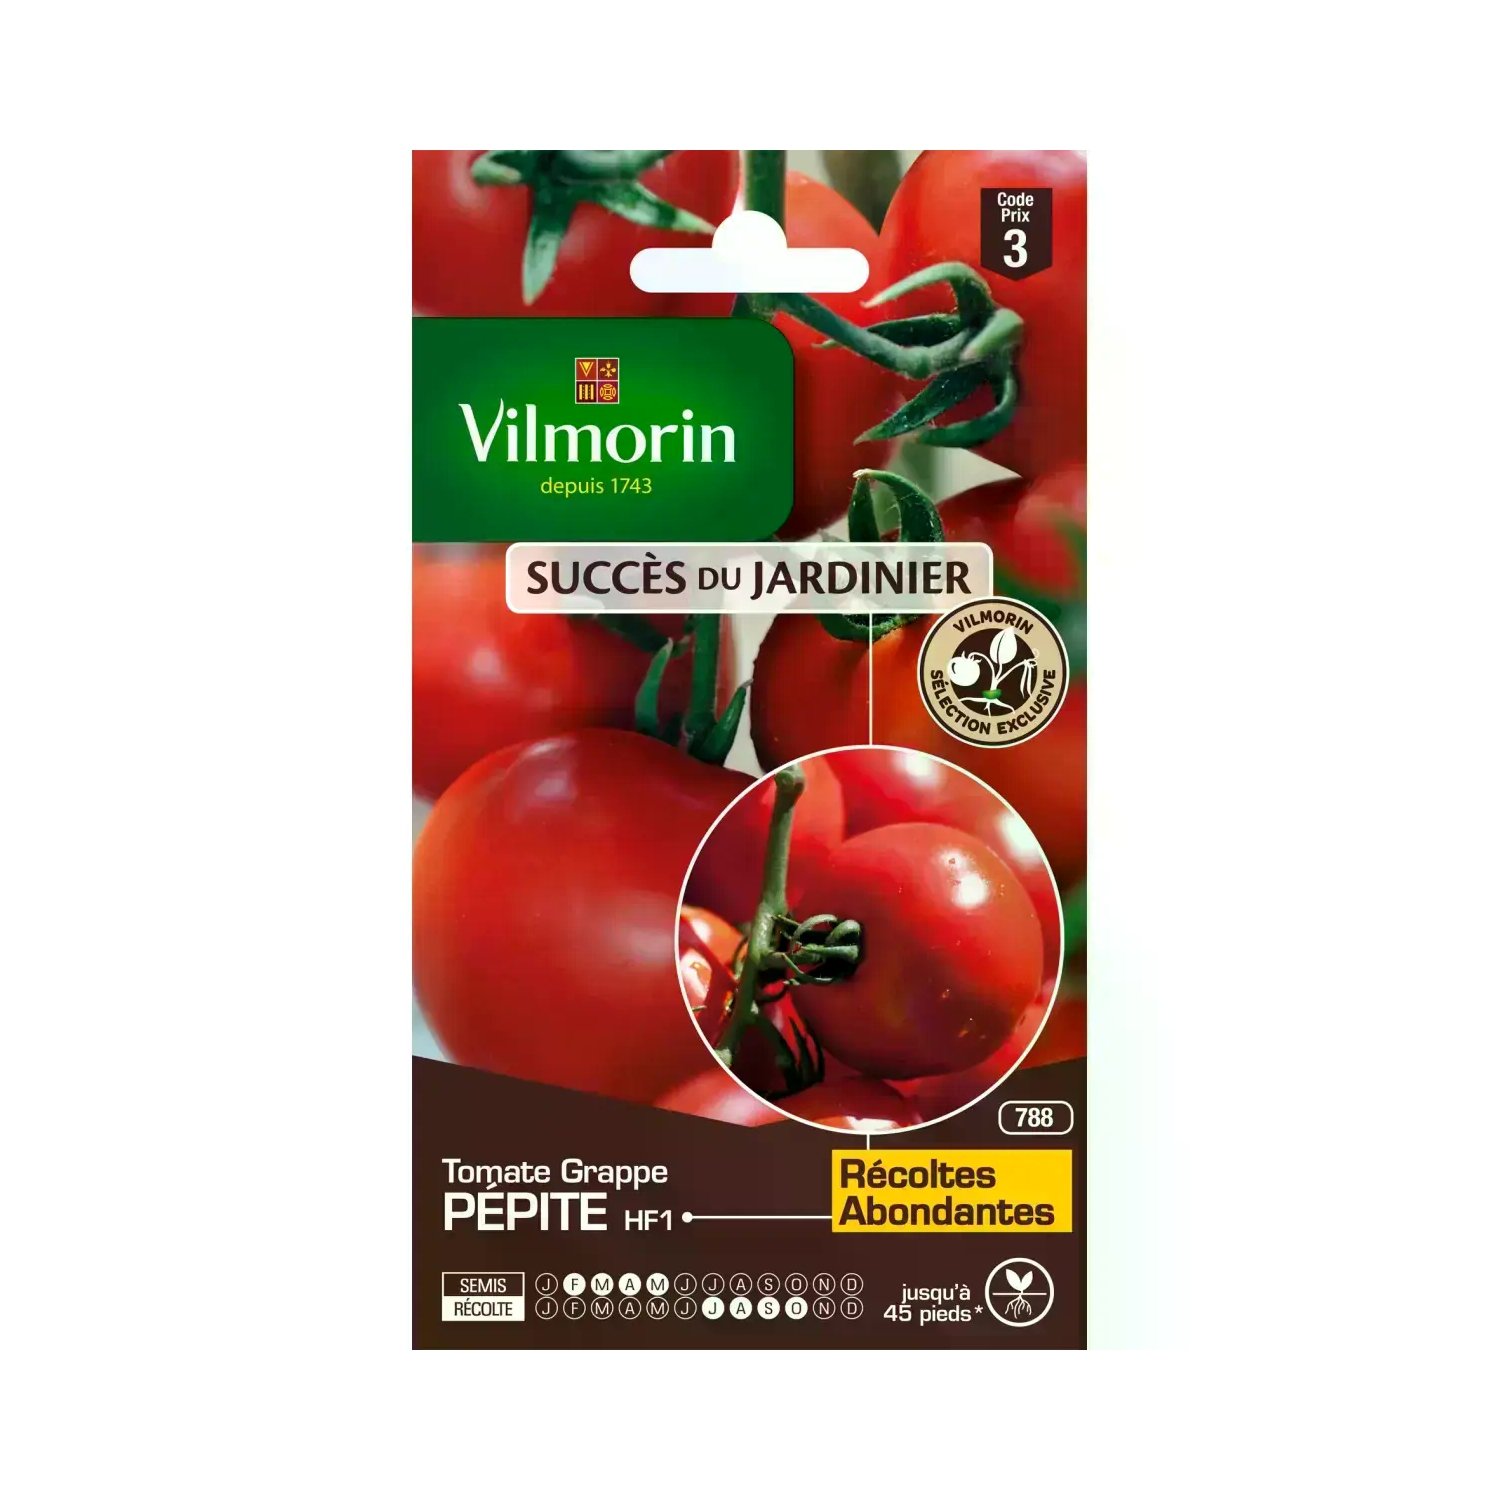 Sachet graines Tomate fournaise HF1